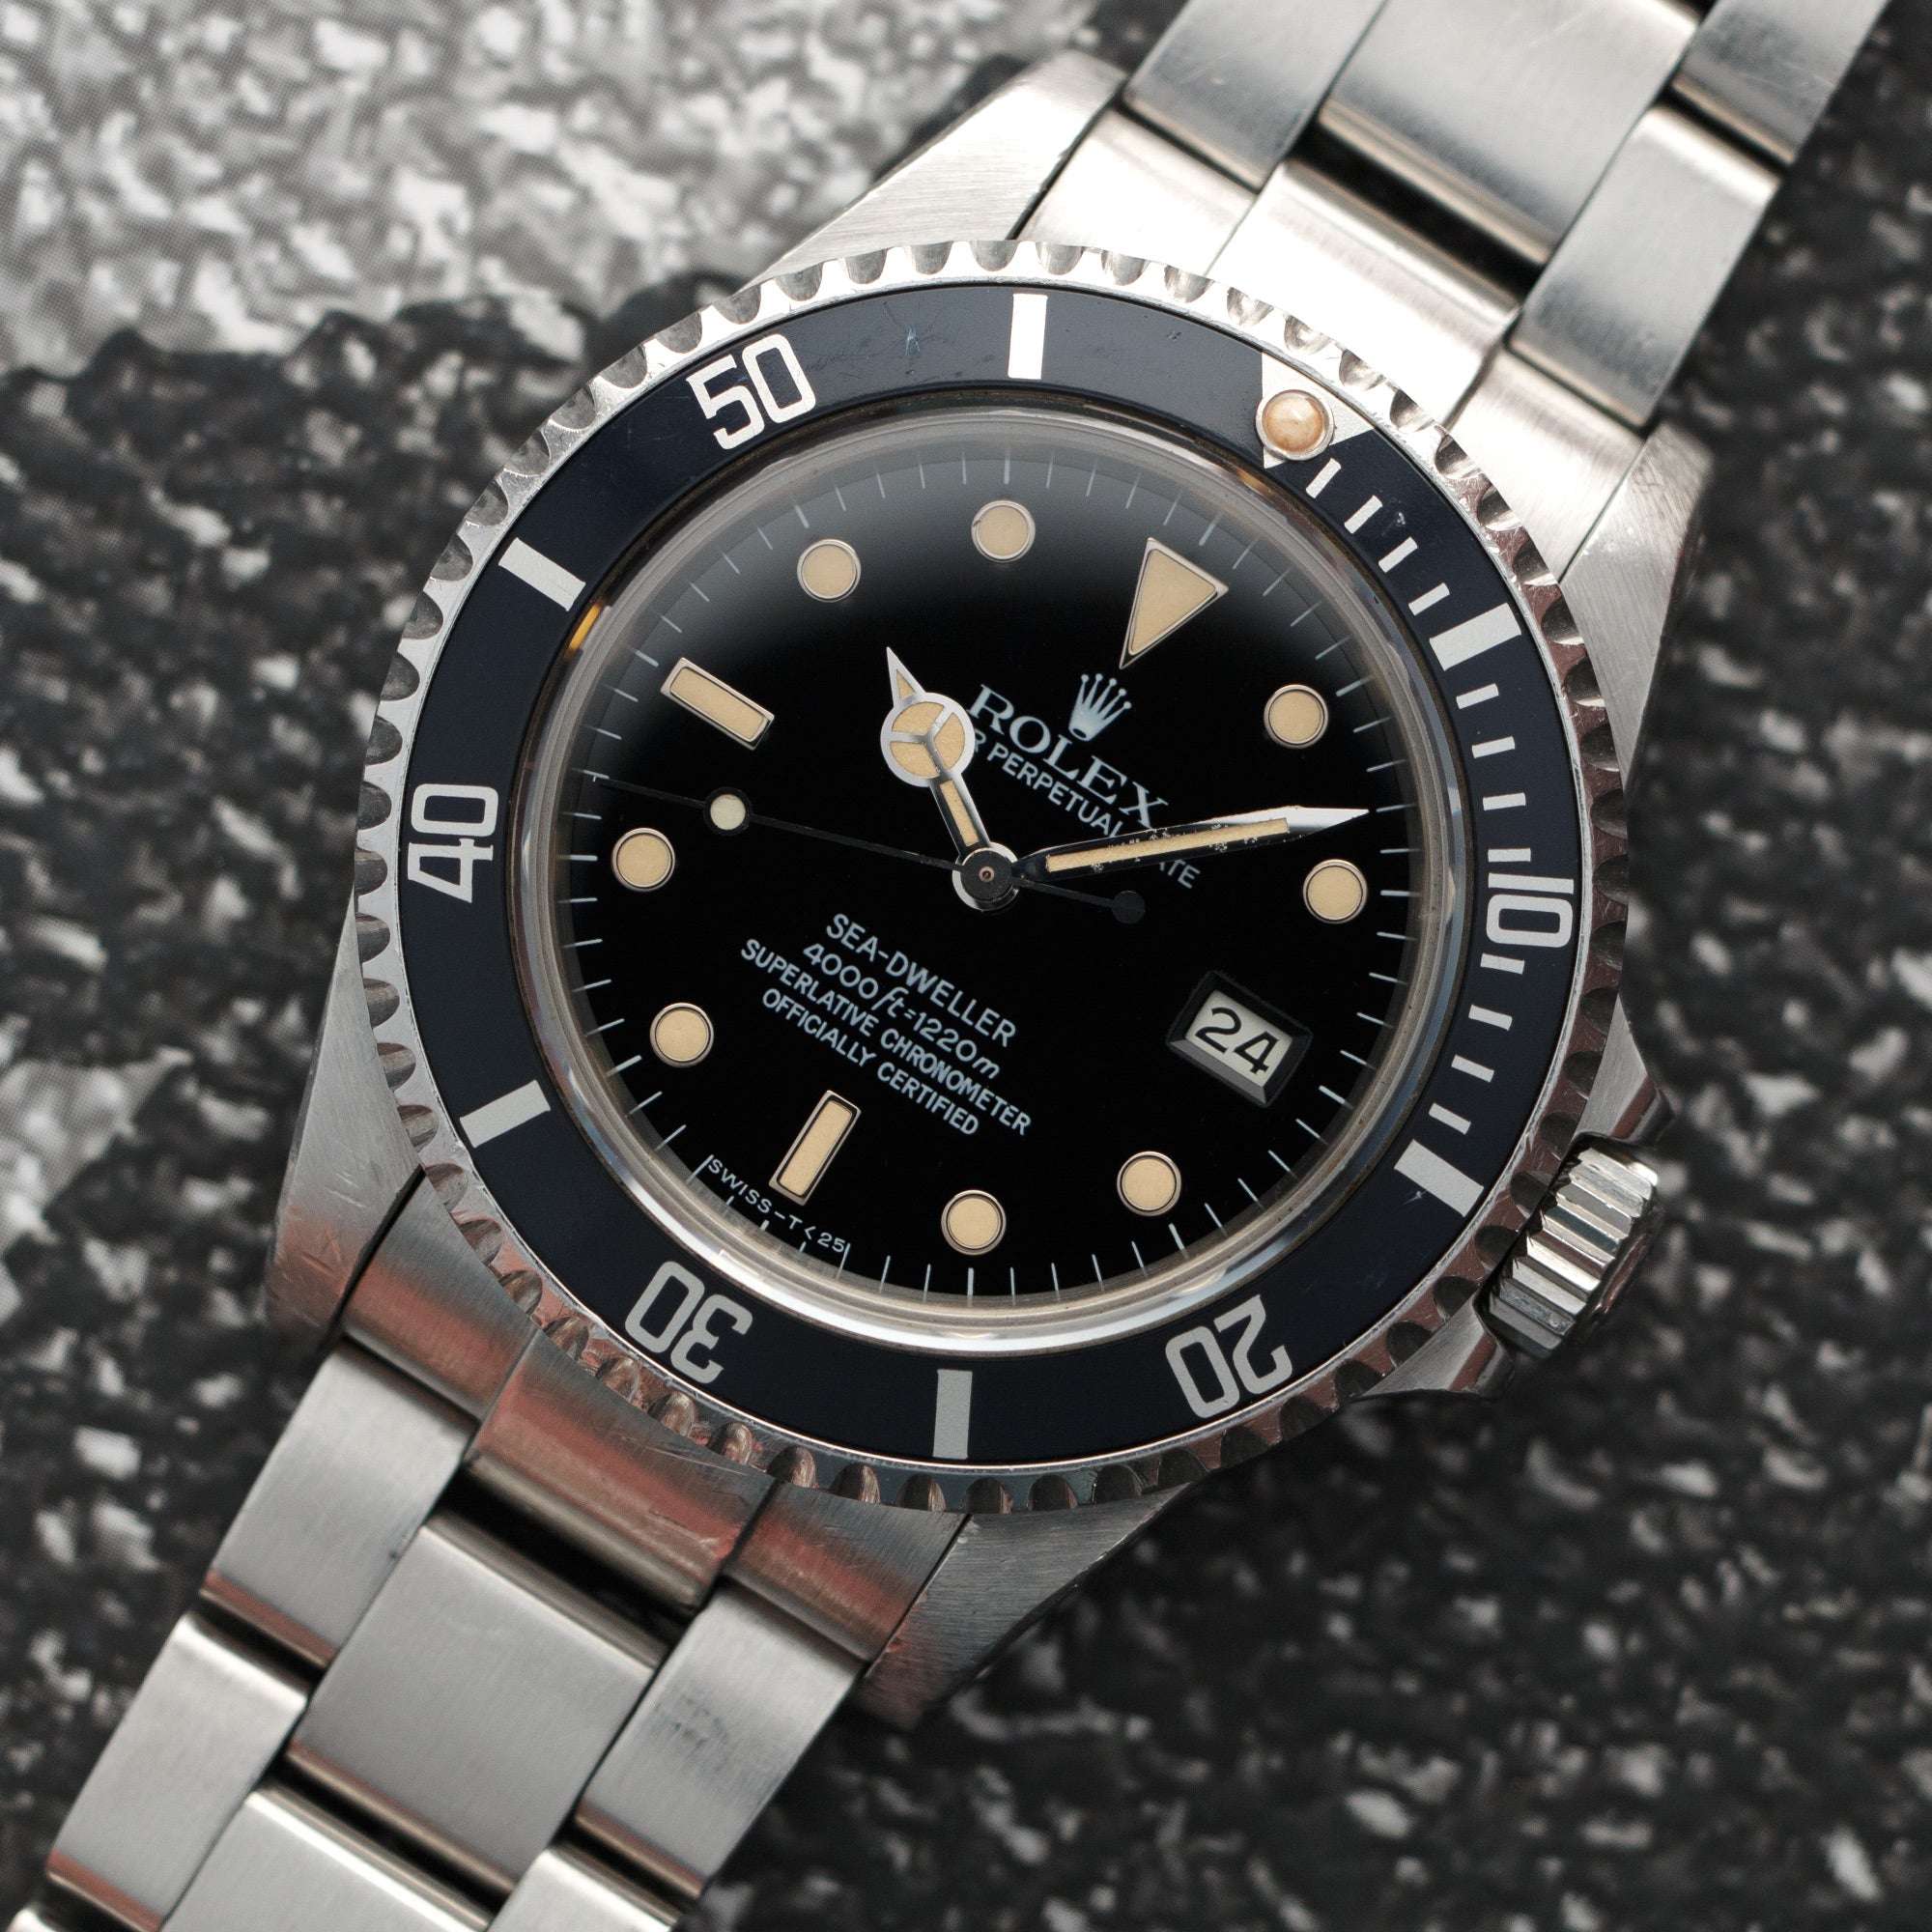 Rolex Steel – The Watches